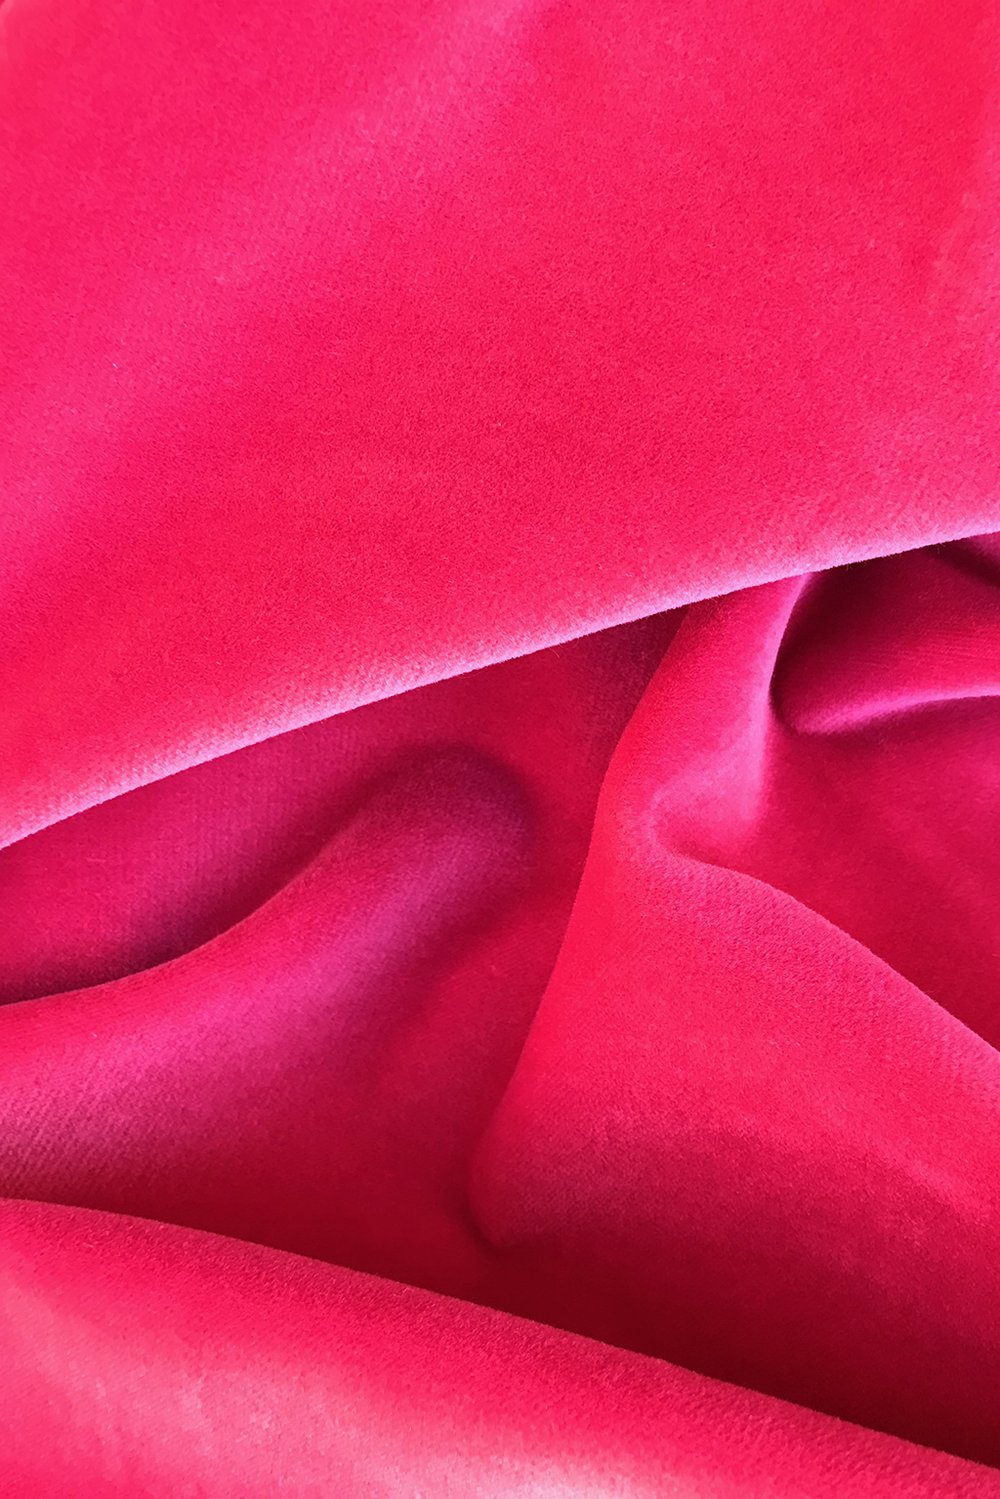 Cotton Velvet in Fuchsia Pink — Fabrics at Play